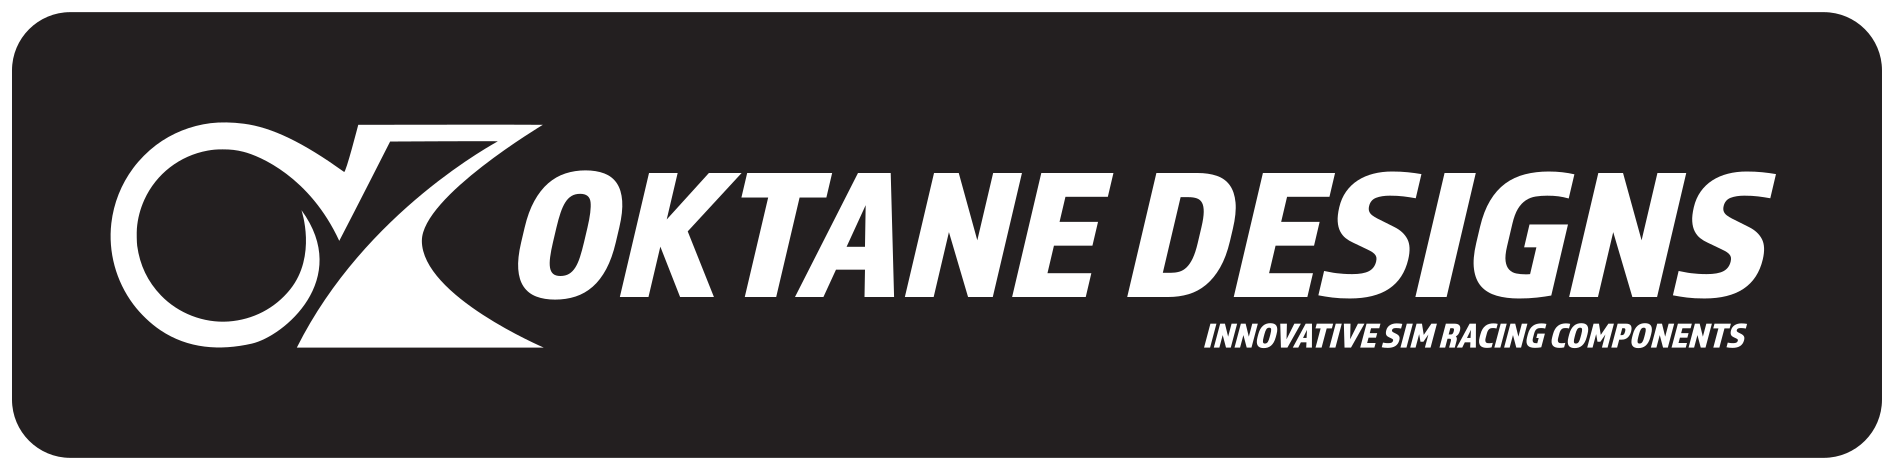 Oktane Designs Tracked Logo.png